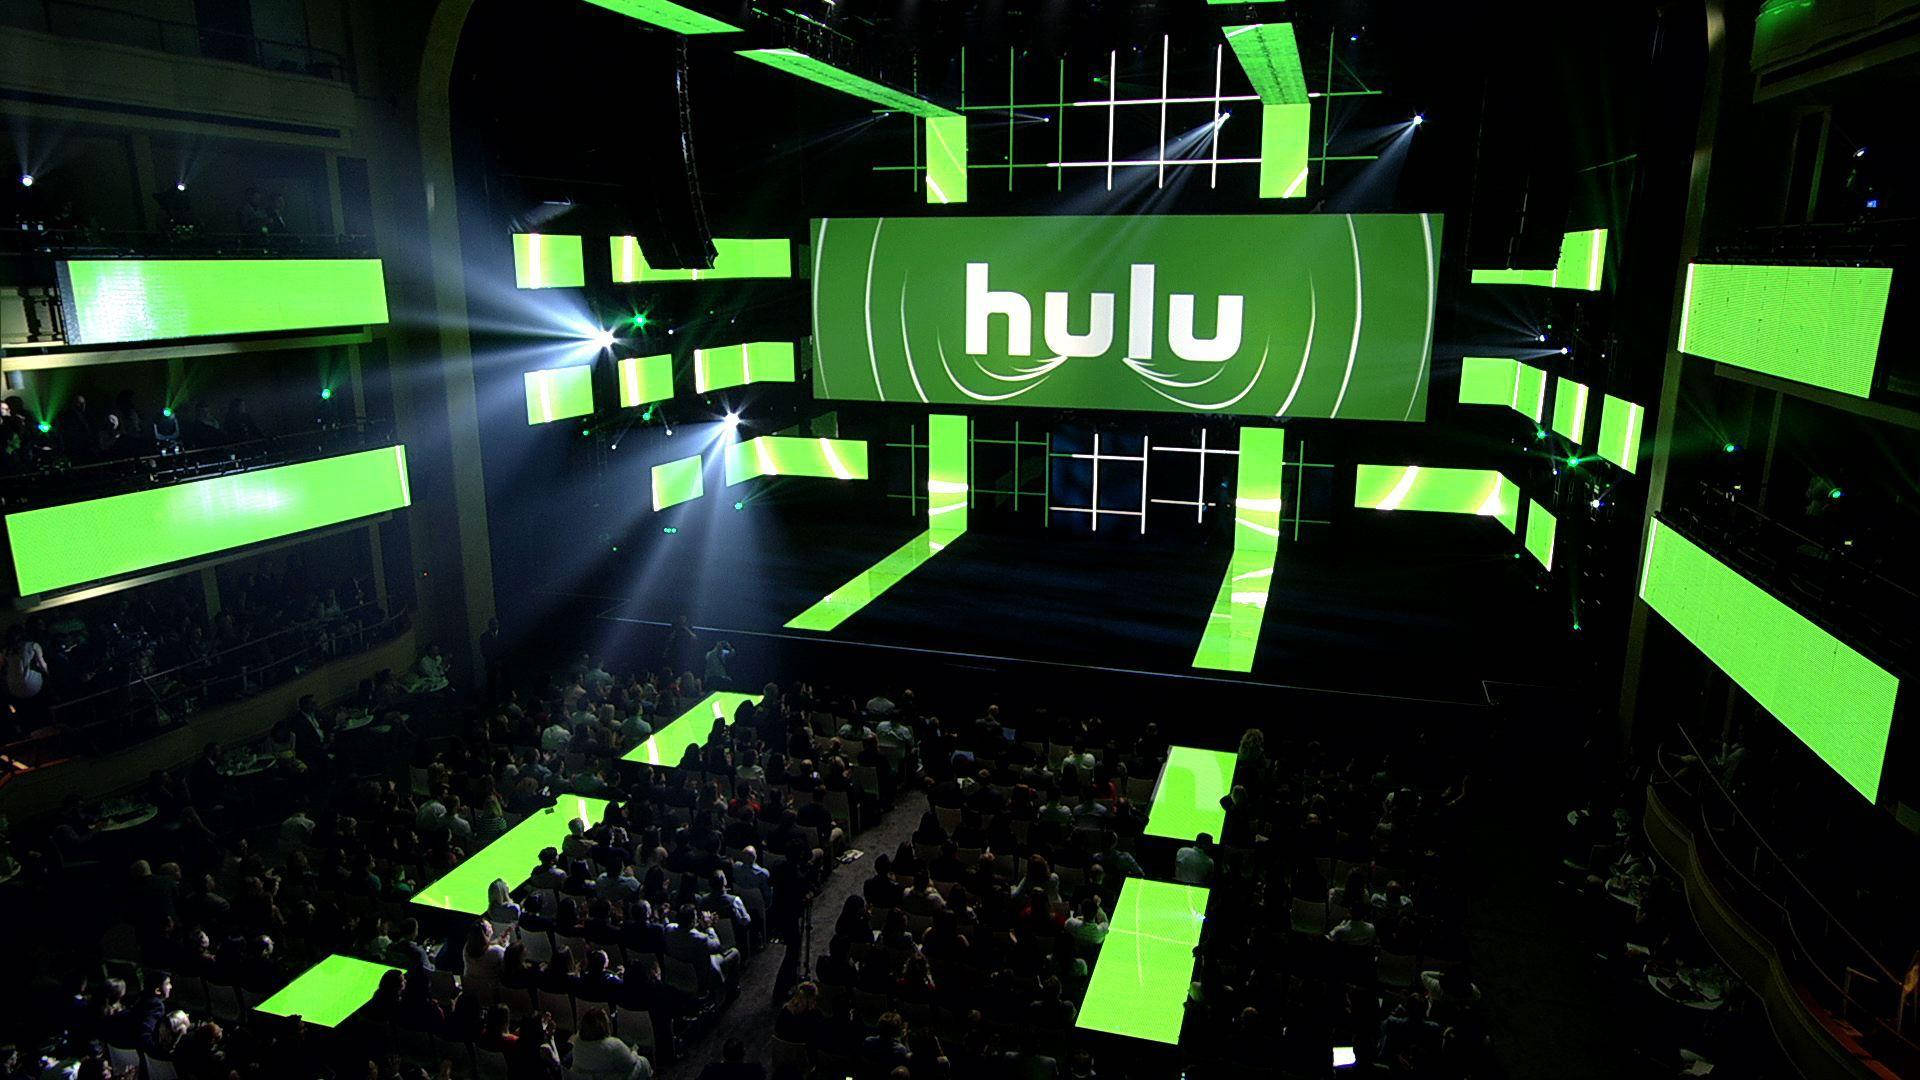 Hulu Newfront Presentation Background